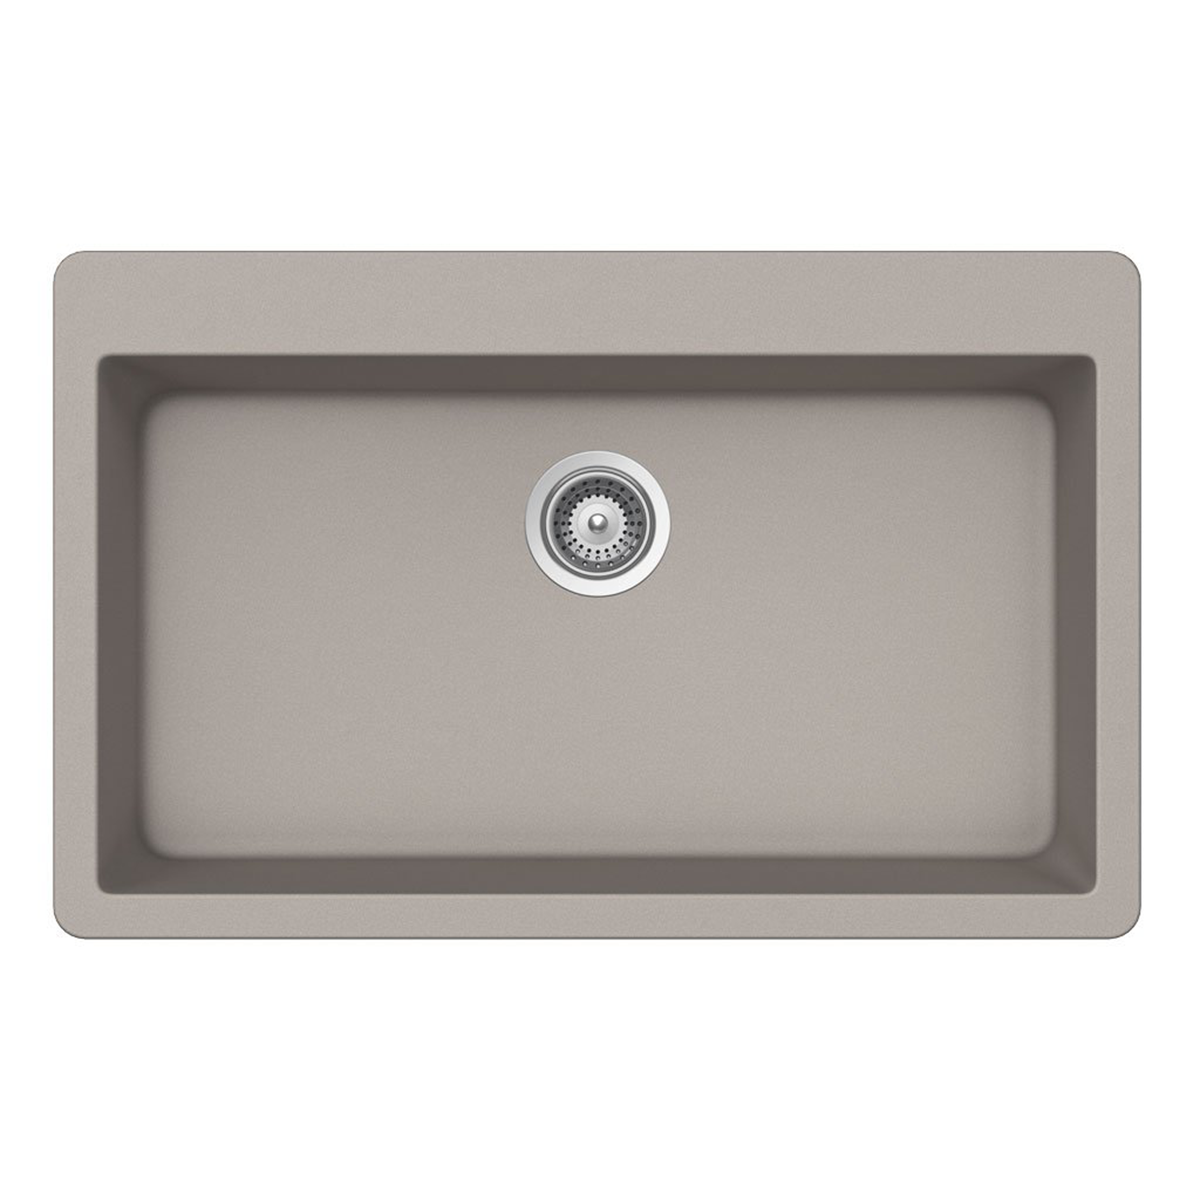 Pelican Int'l Crystallite Series PL-100 33" x 20 7/8" Concrete Granite Composite Topmount/ Undermount Kitchen Sink